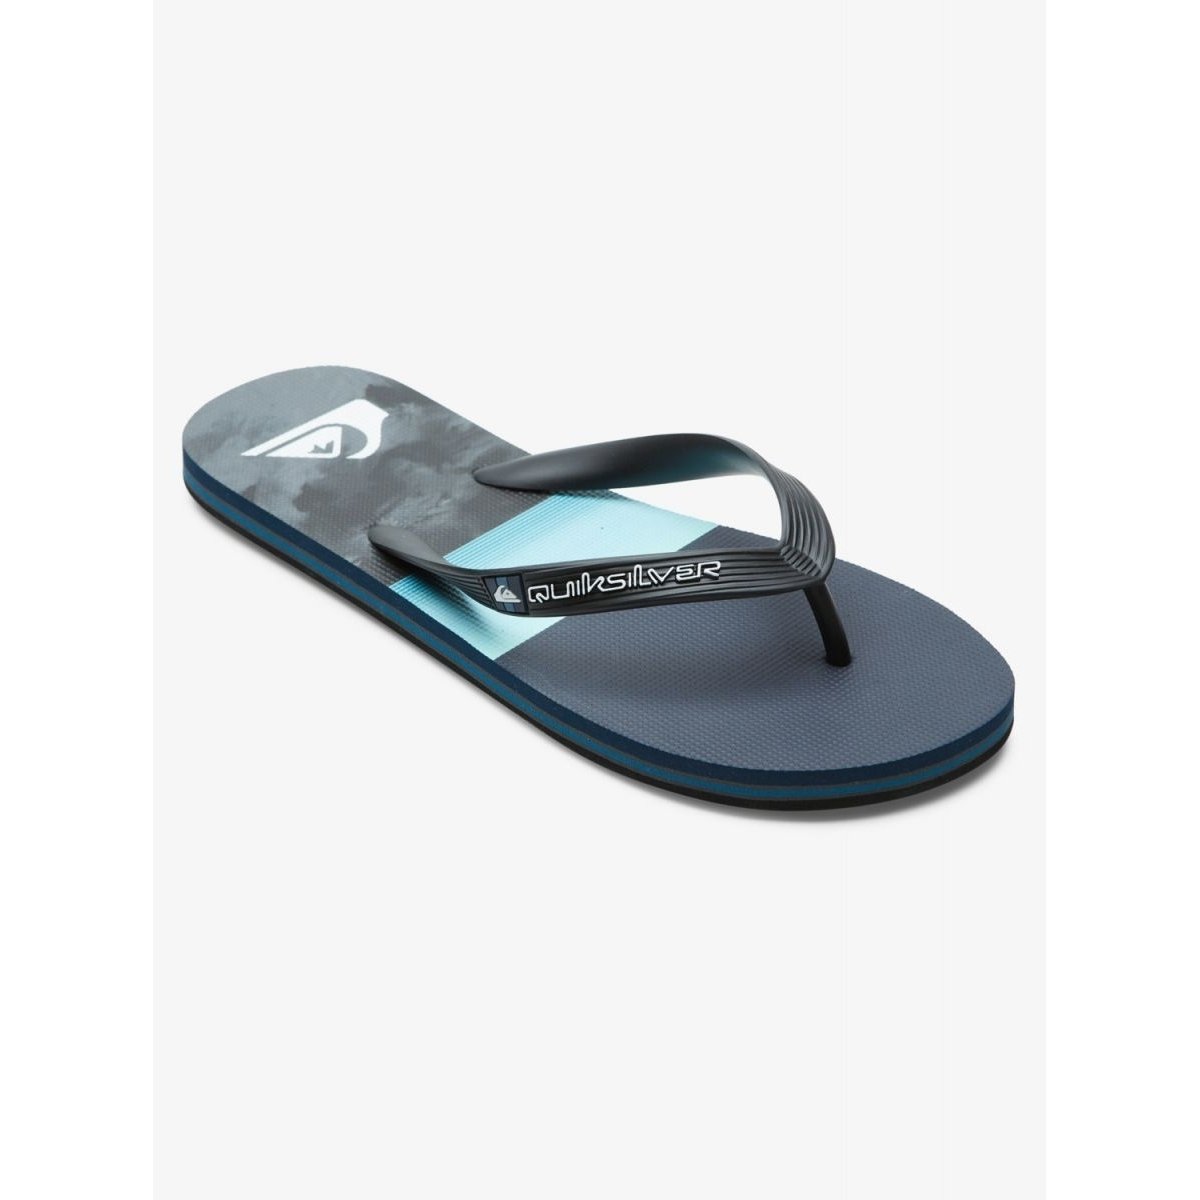 Quiksilver Men's Molokai Panel Flip Flop Sandals - AQYL101263-XBBS BLUE/BLUE/GREY - BLUE/BLUE/GREY, 8